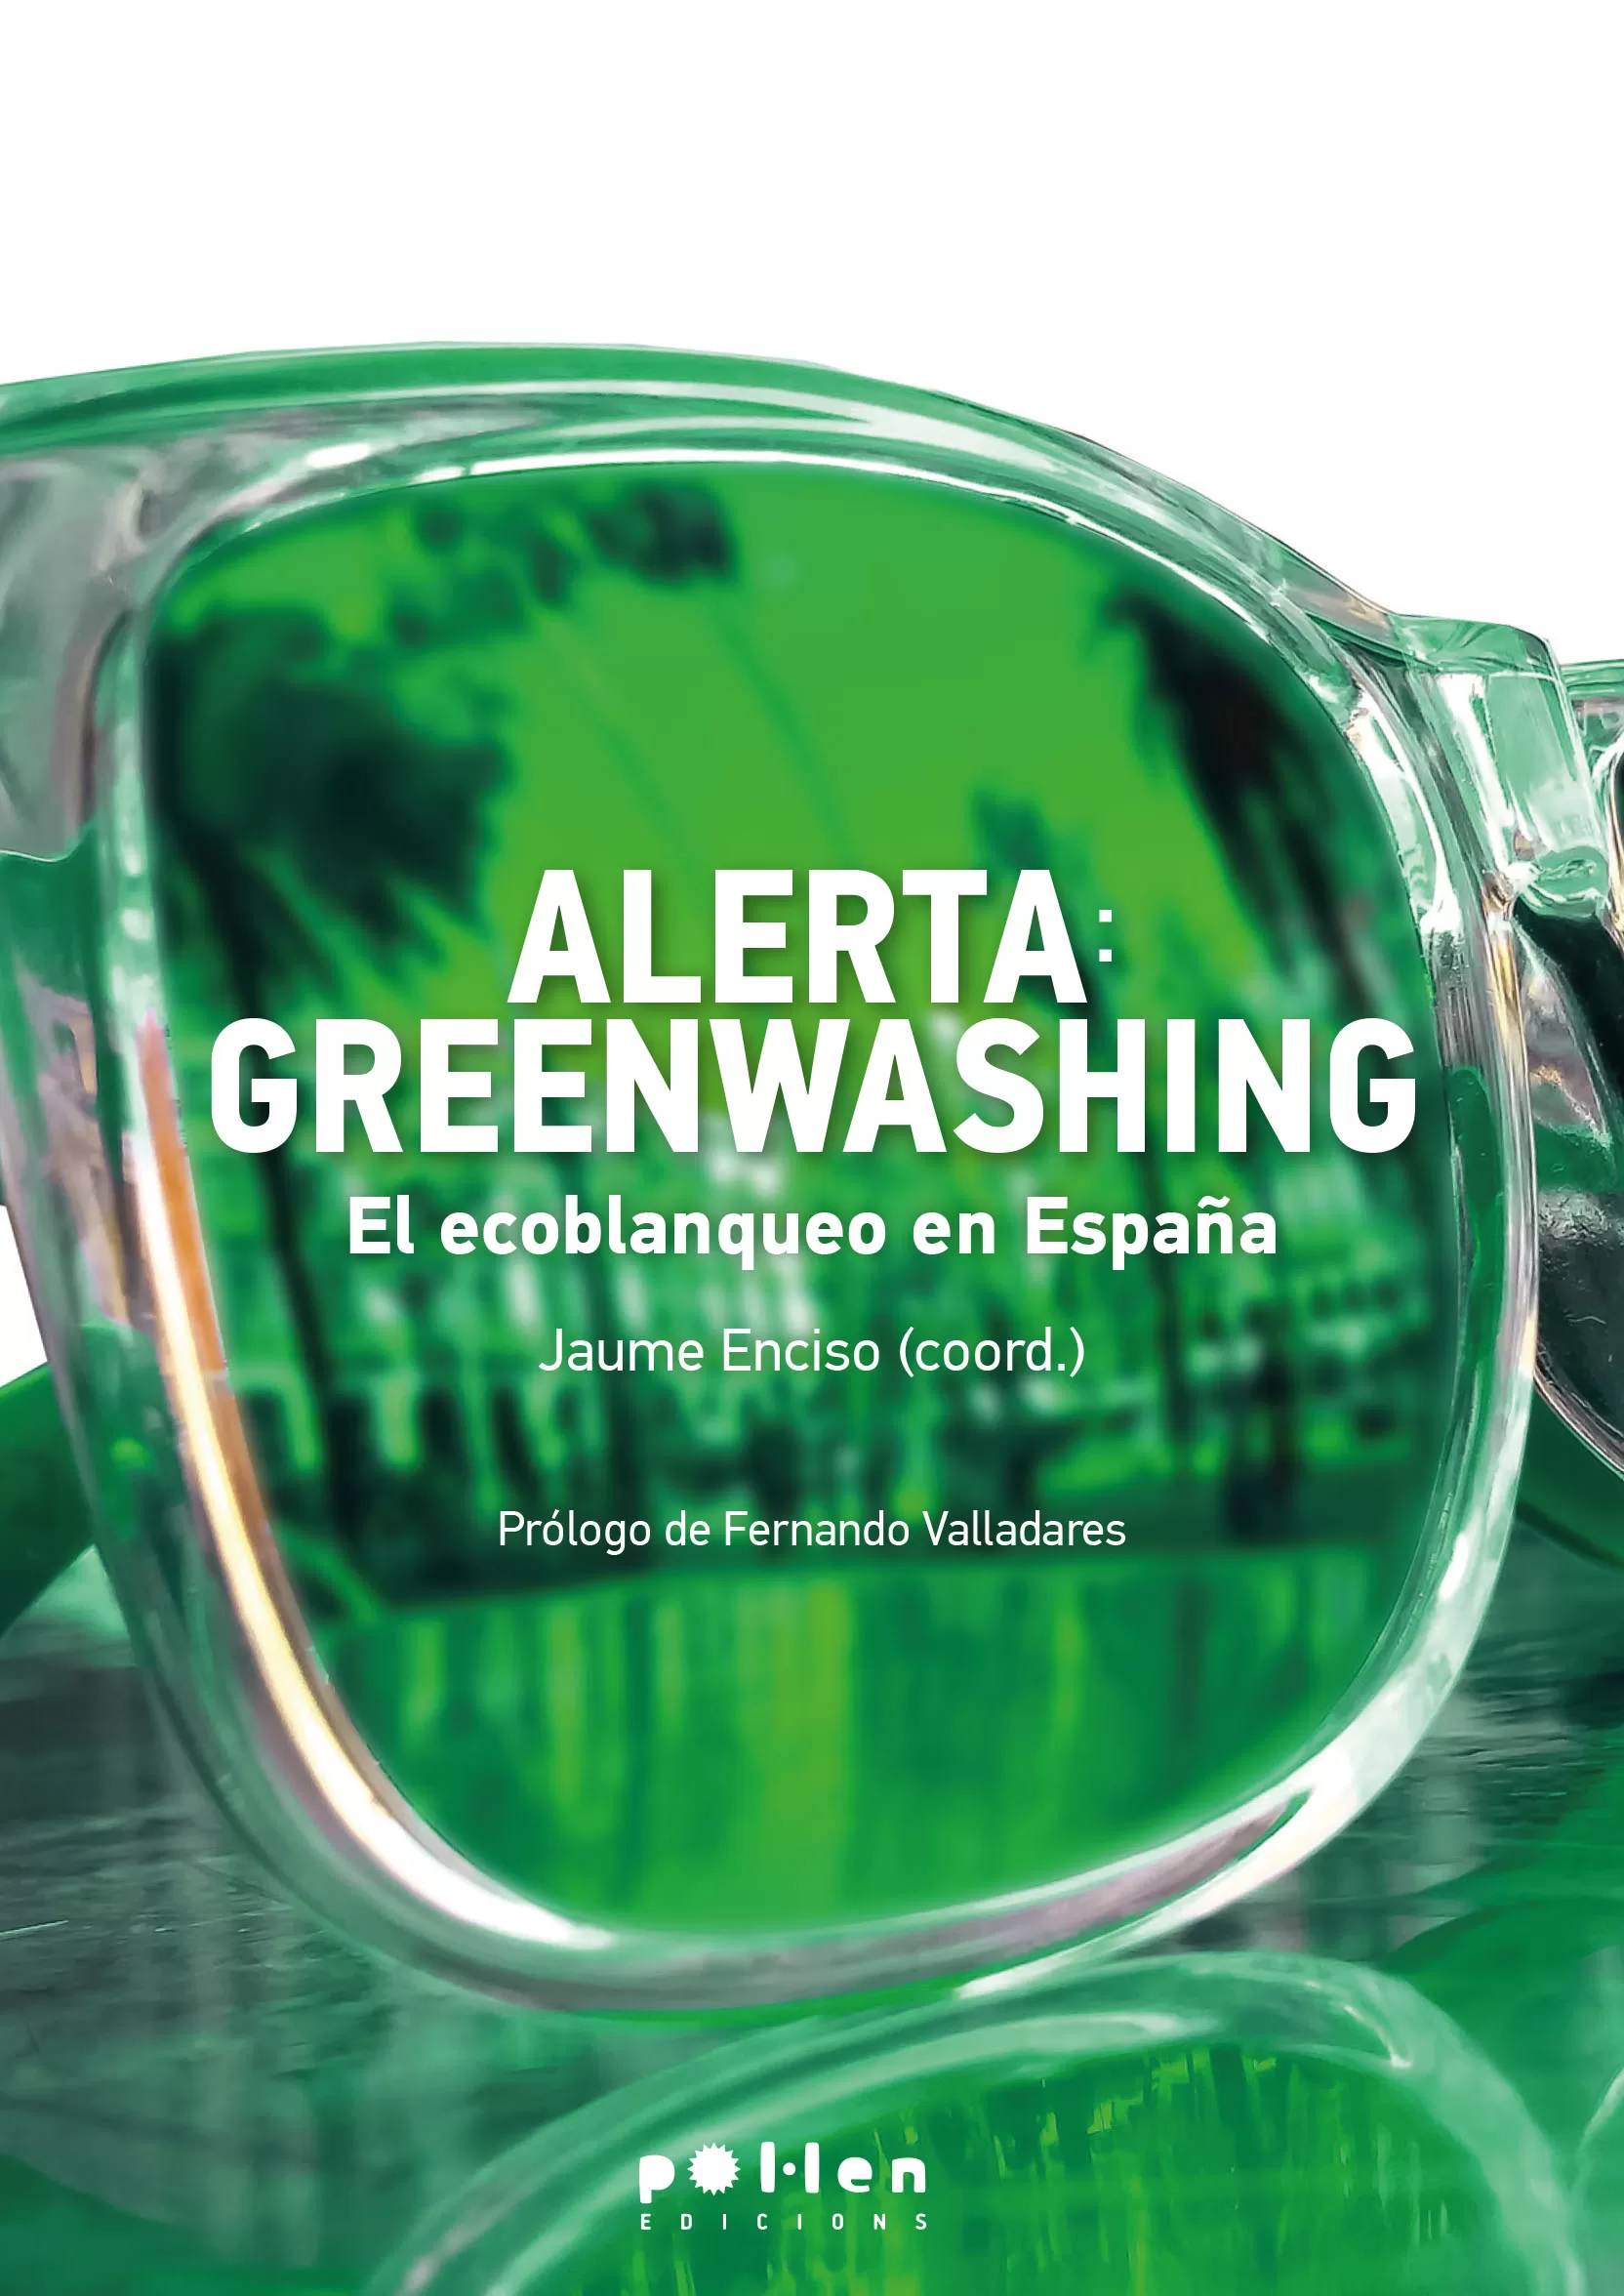 Alerta greenwashing - Jaume Enciso